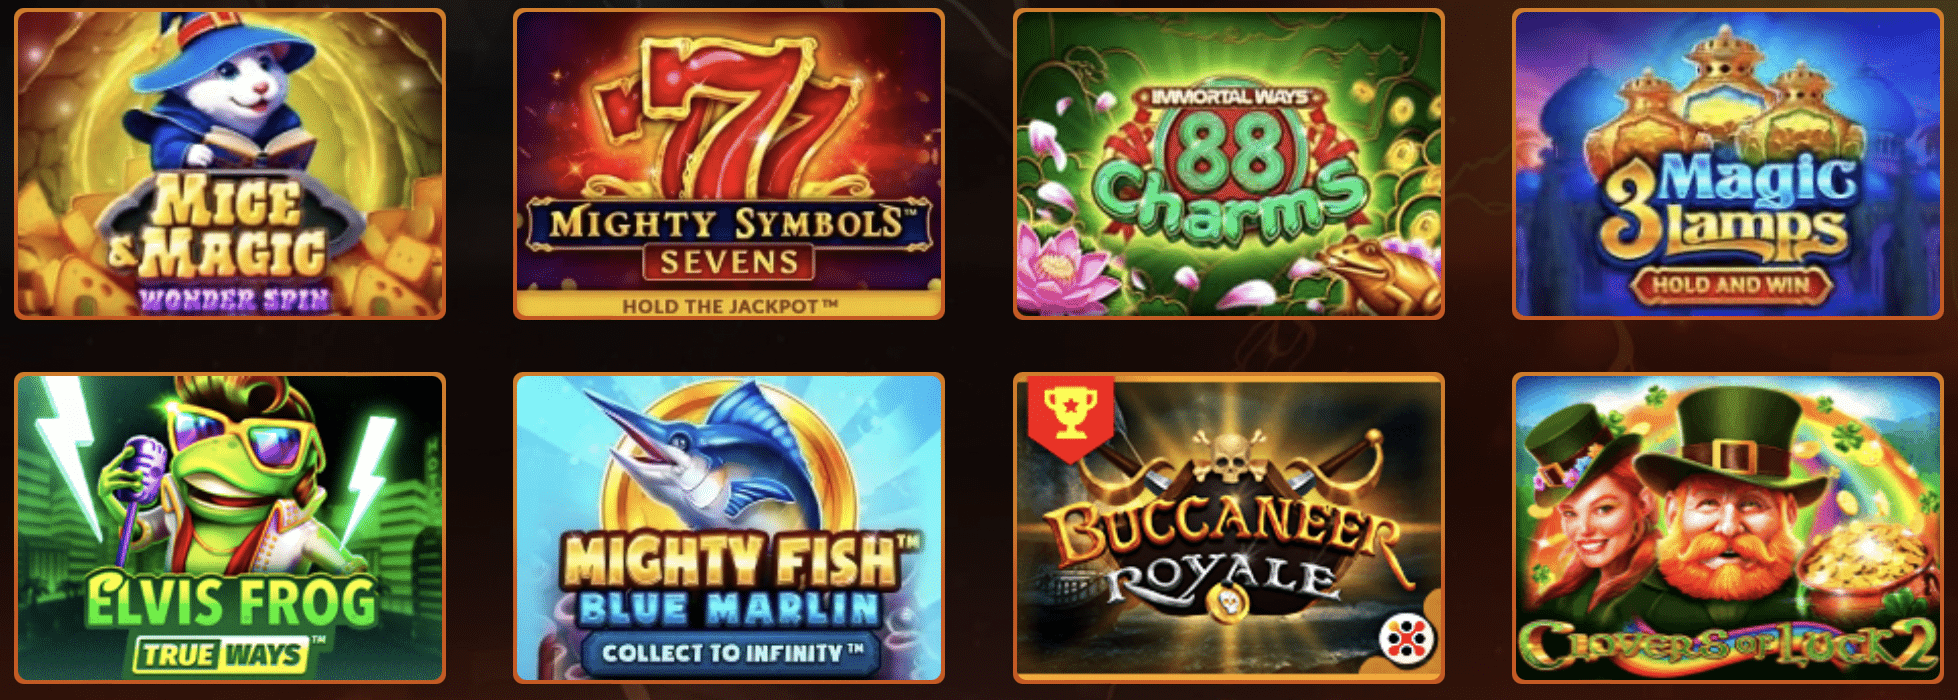 Casino Intense games/slots